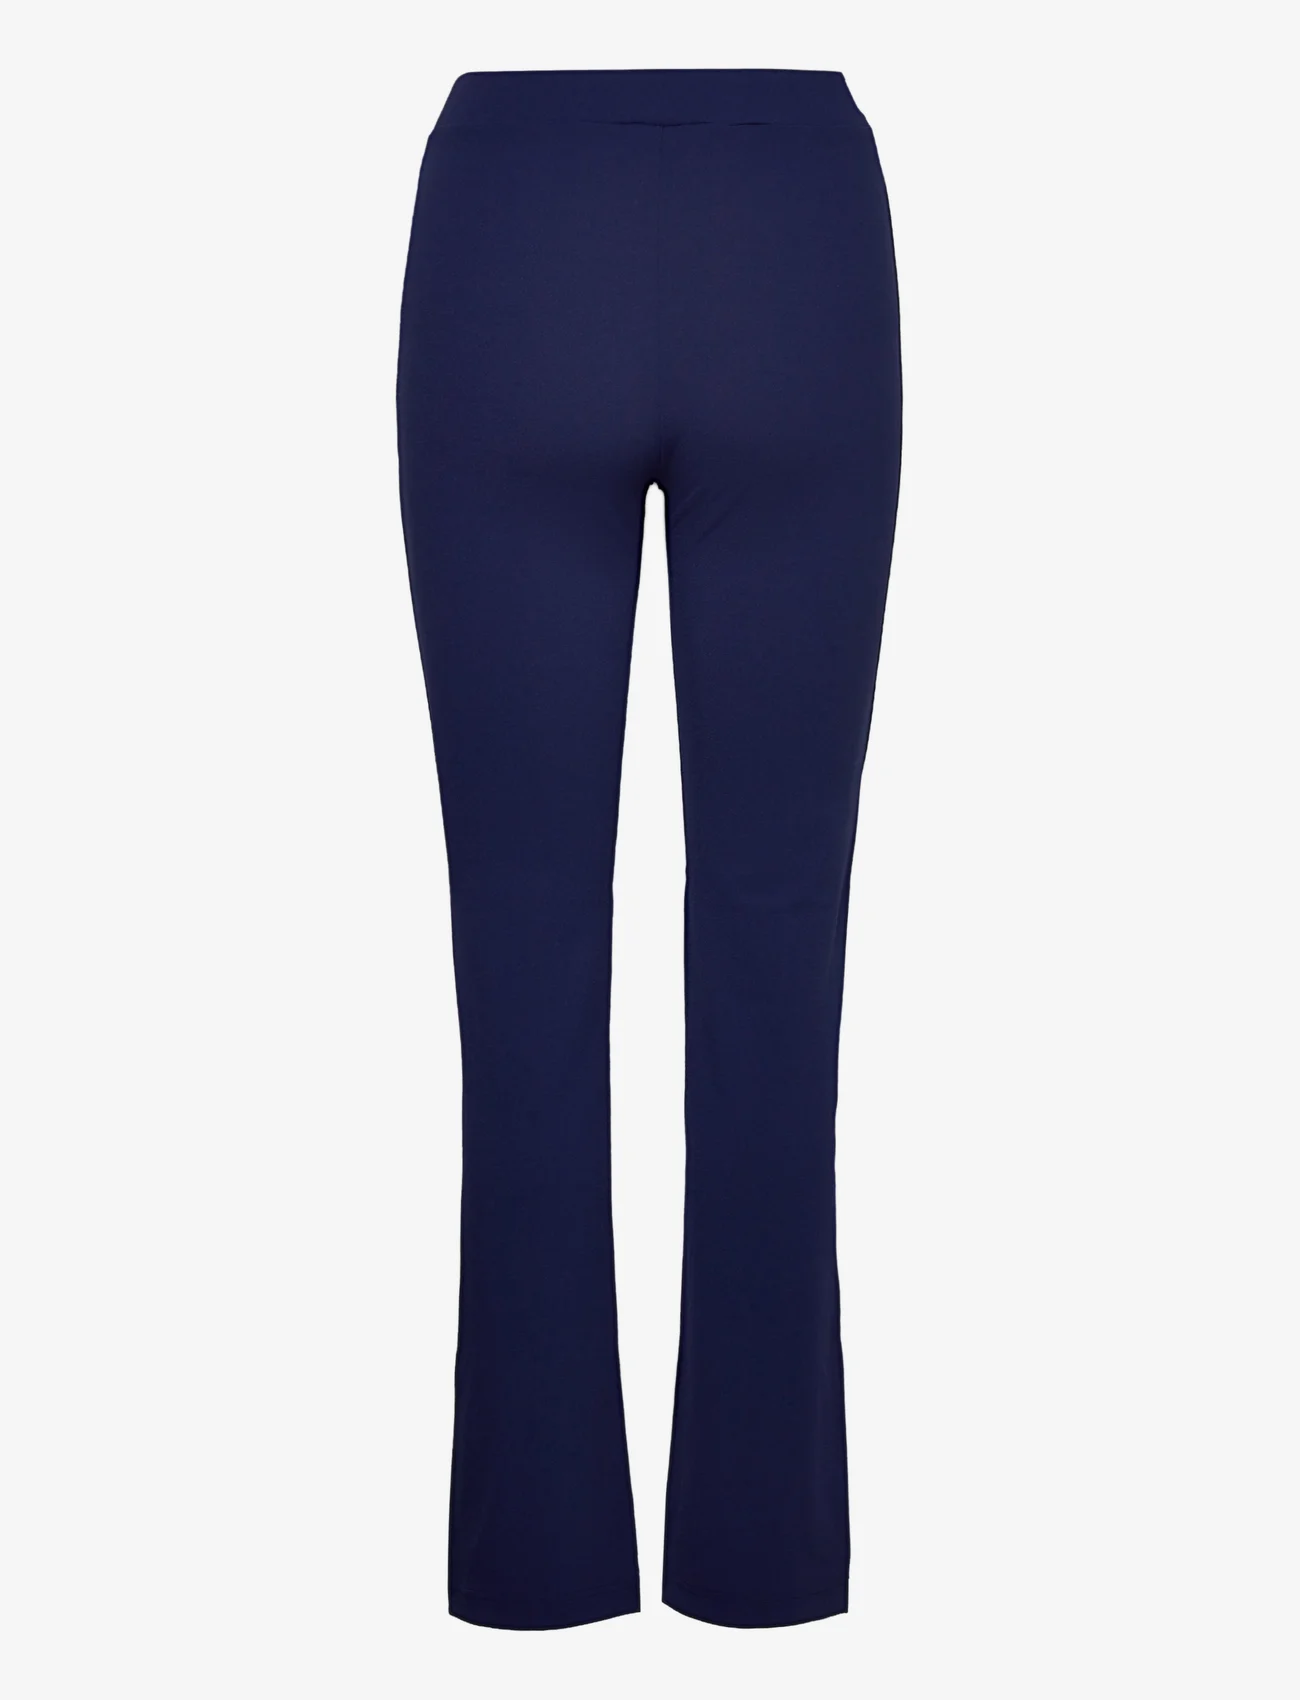 FILA - TRANI flare pants with slit - medieval blue - 1